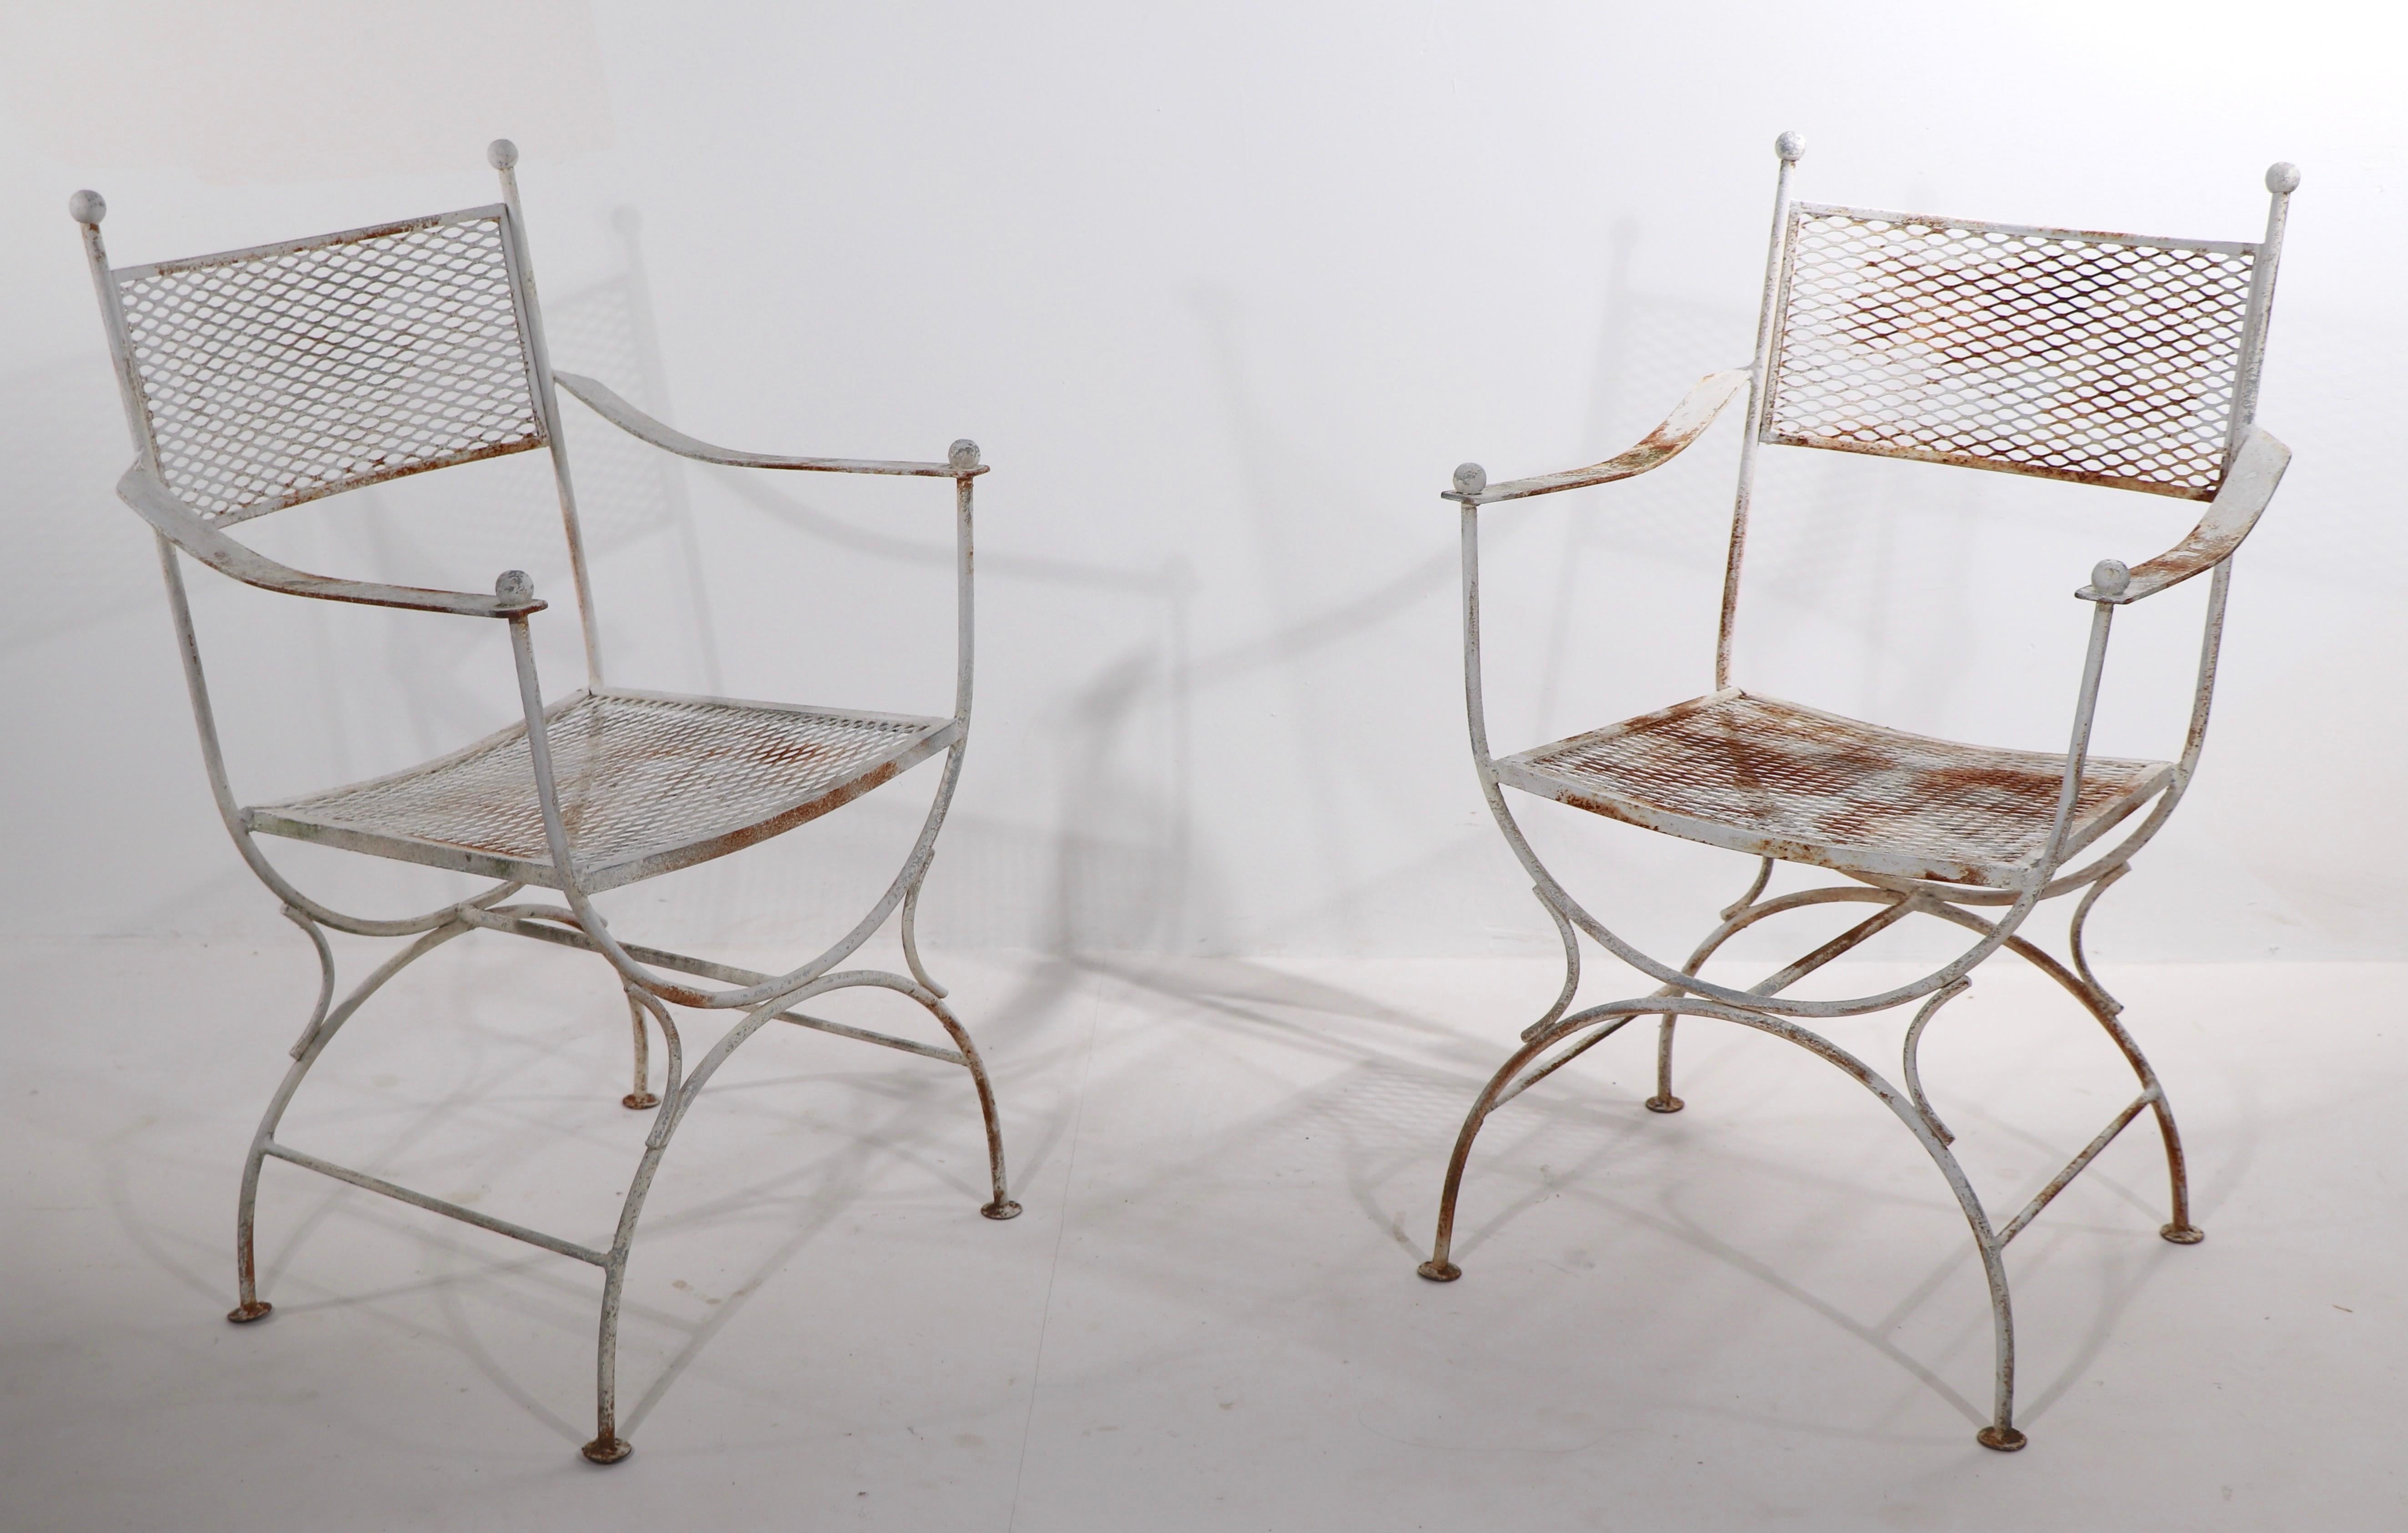 20th Century Pr. Wrought Iron Patio Garden Chairs attributed to Salterini